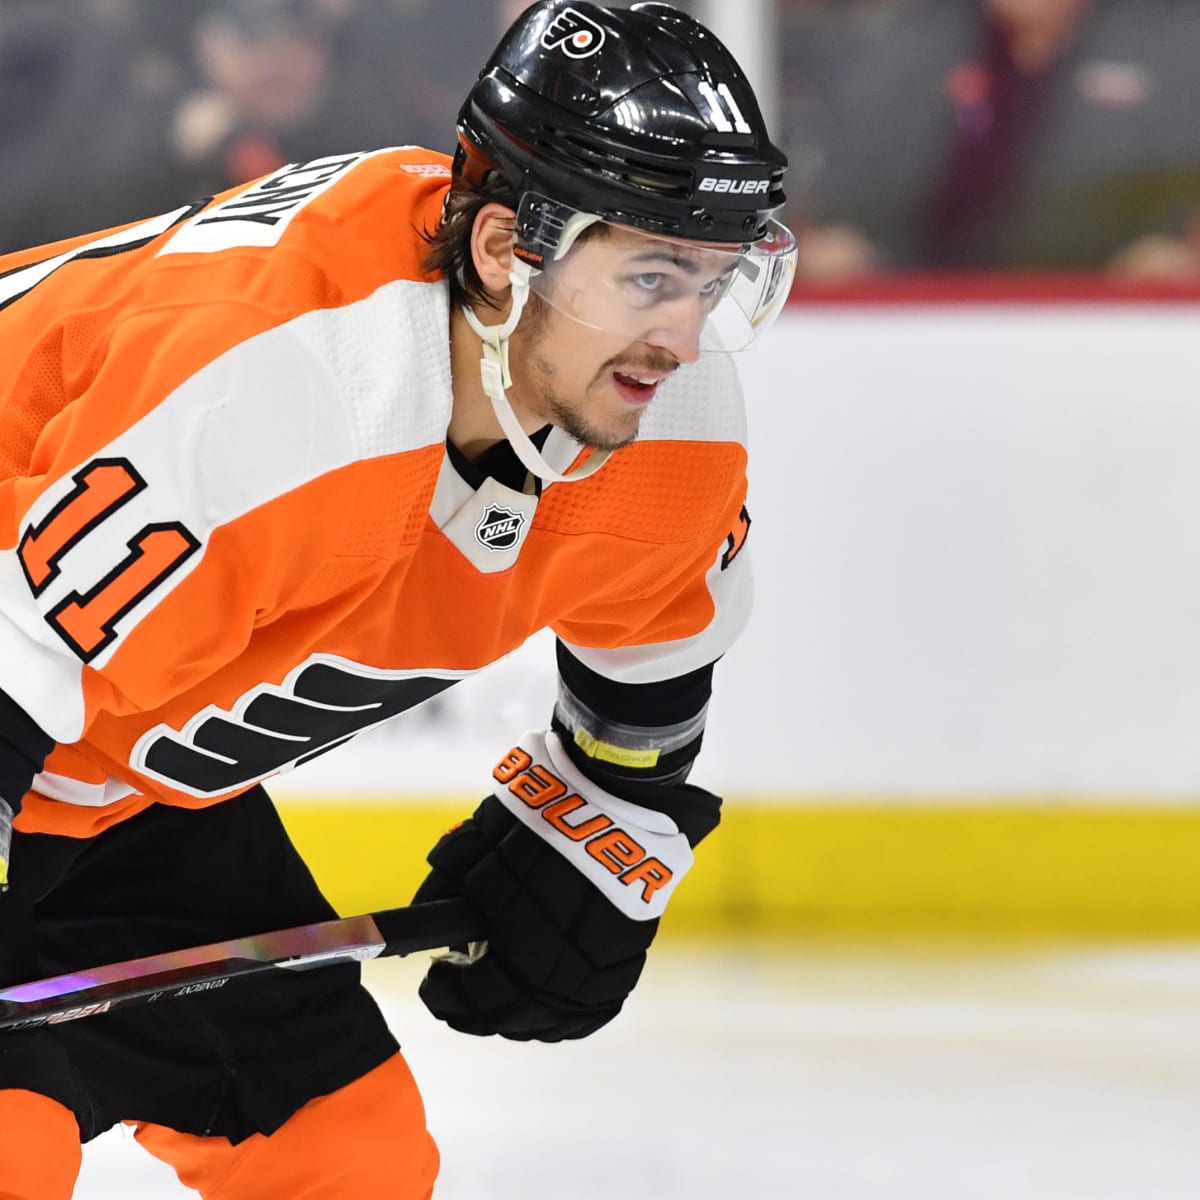 Rookies on the Radar: Carter Hart of the Philadelphia Flyers